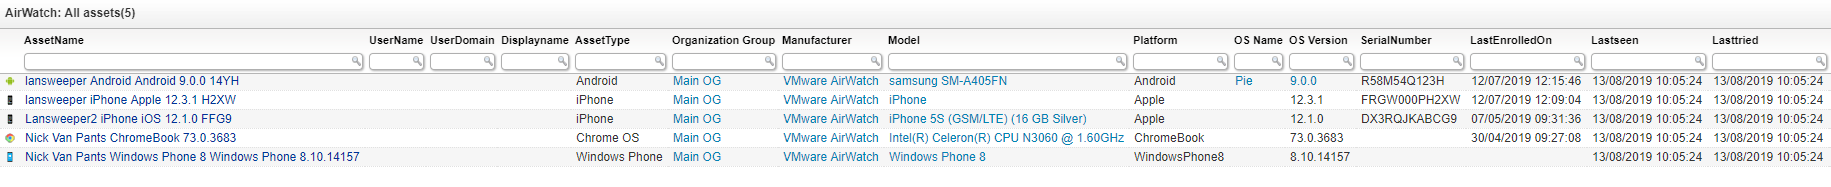 AirWatch devices